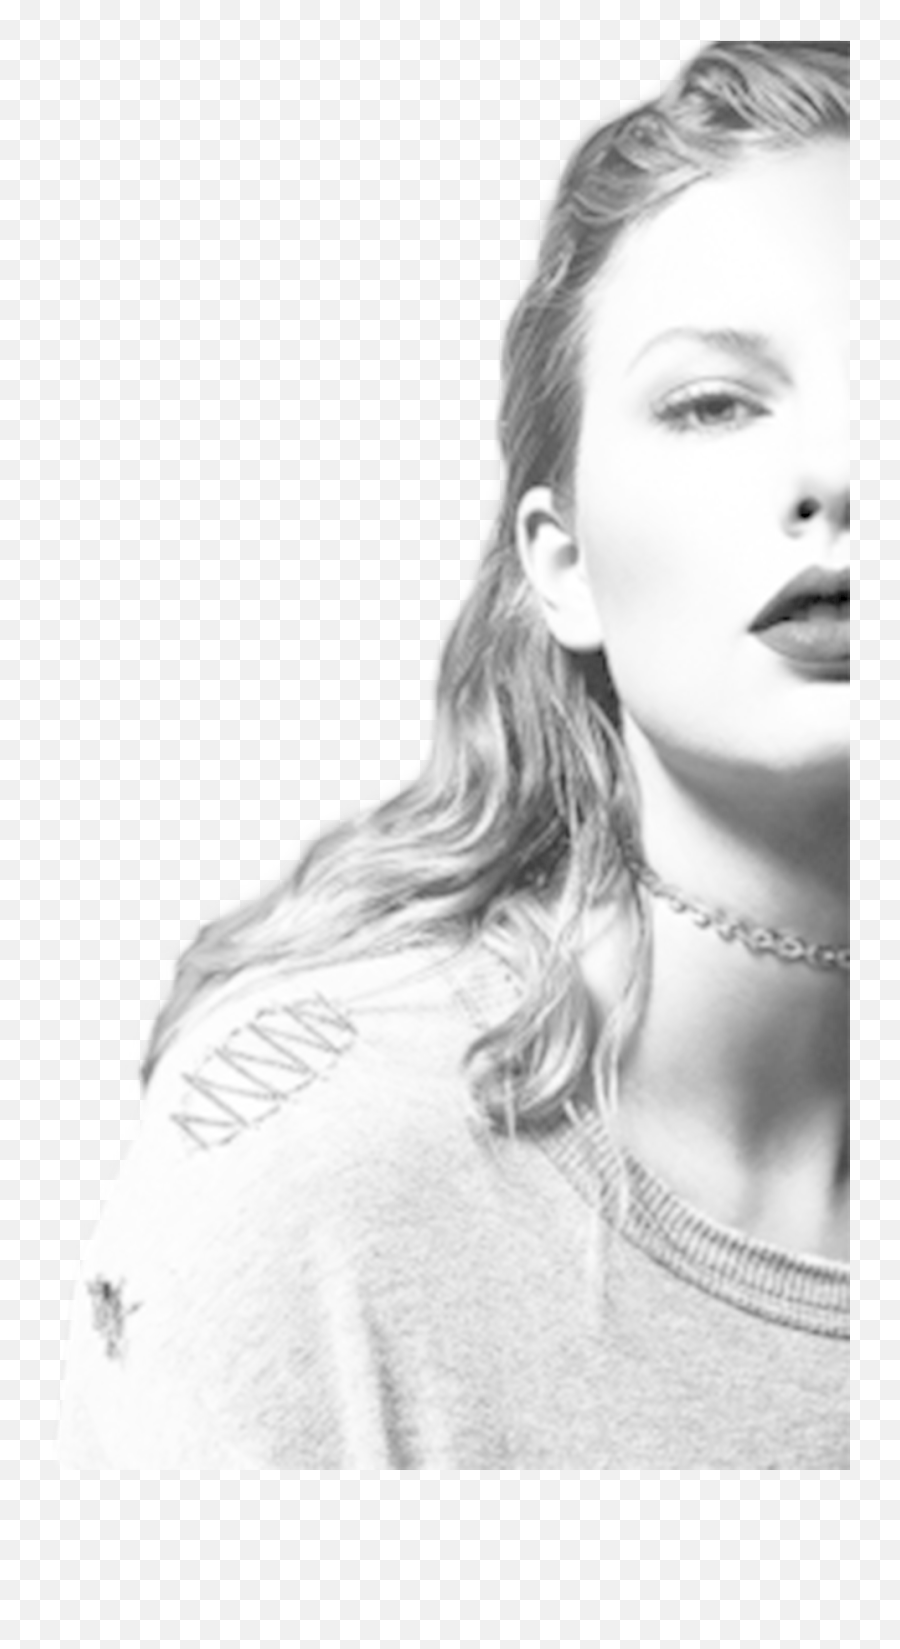 Global Impact - Reputation Taylor Swift Emoji,Taylor Swift Emoji